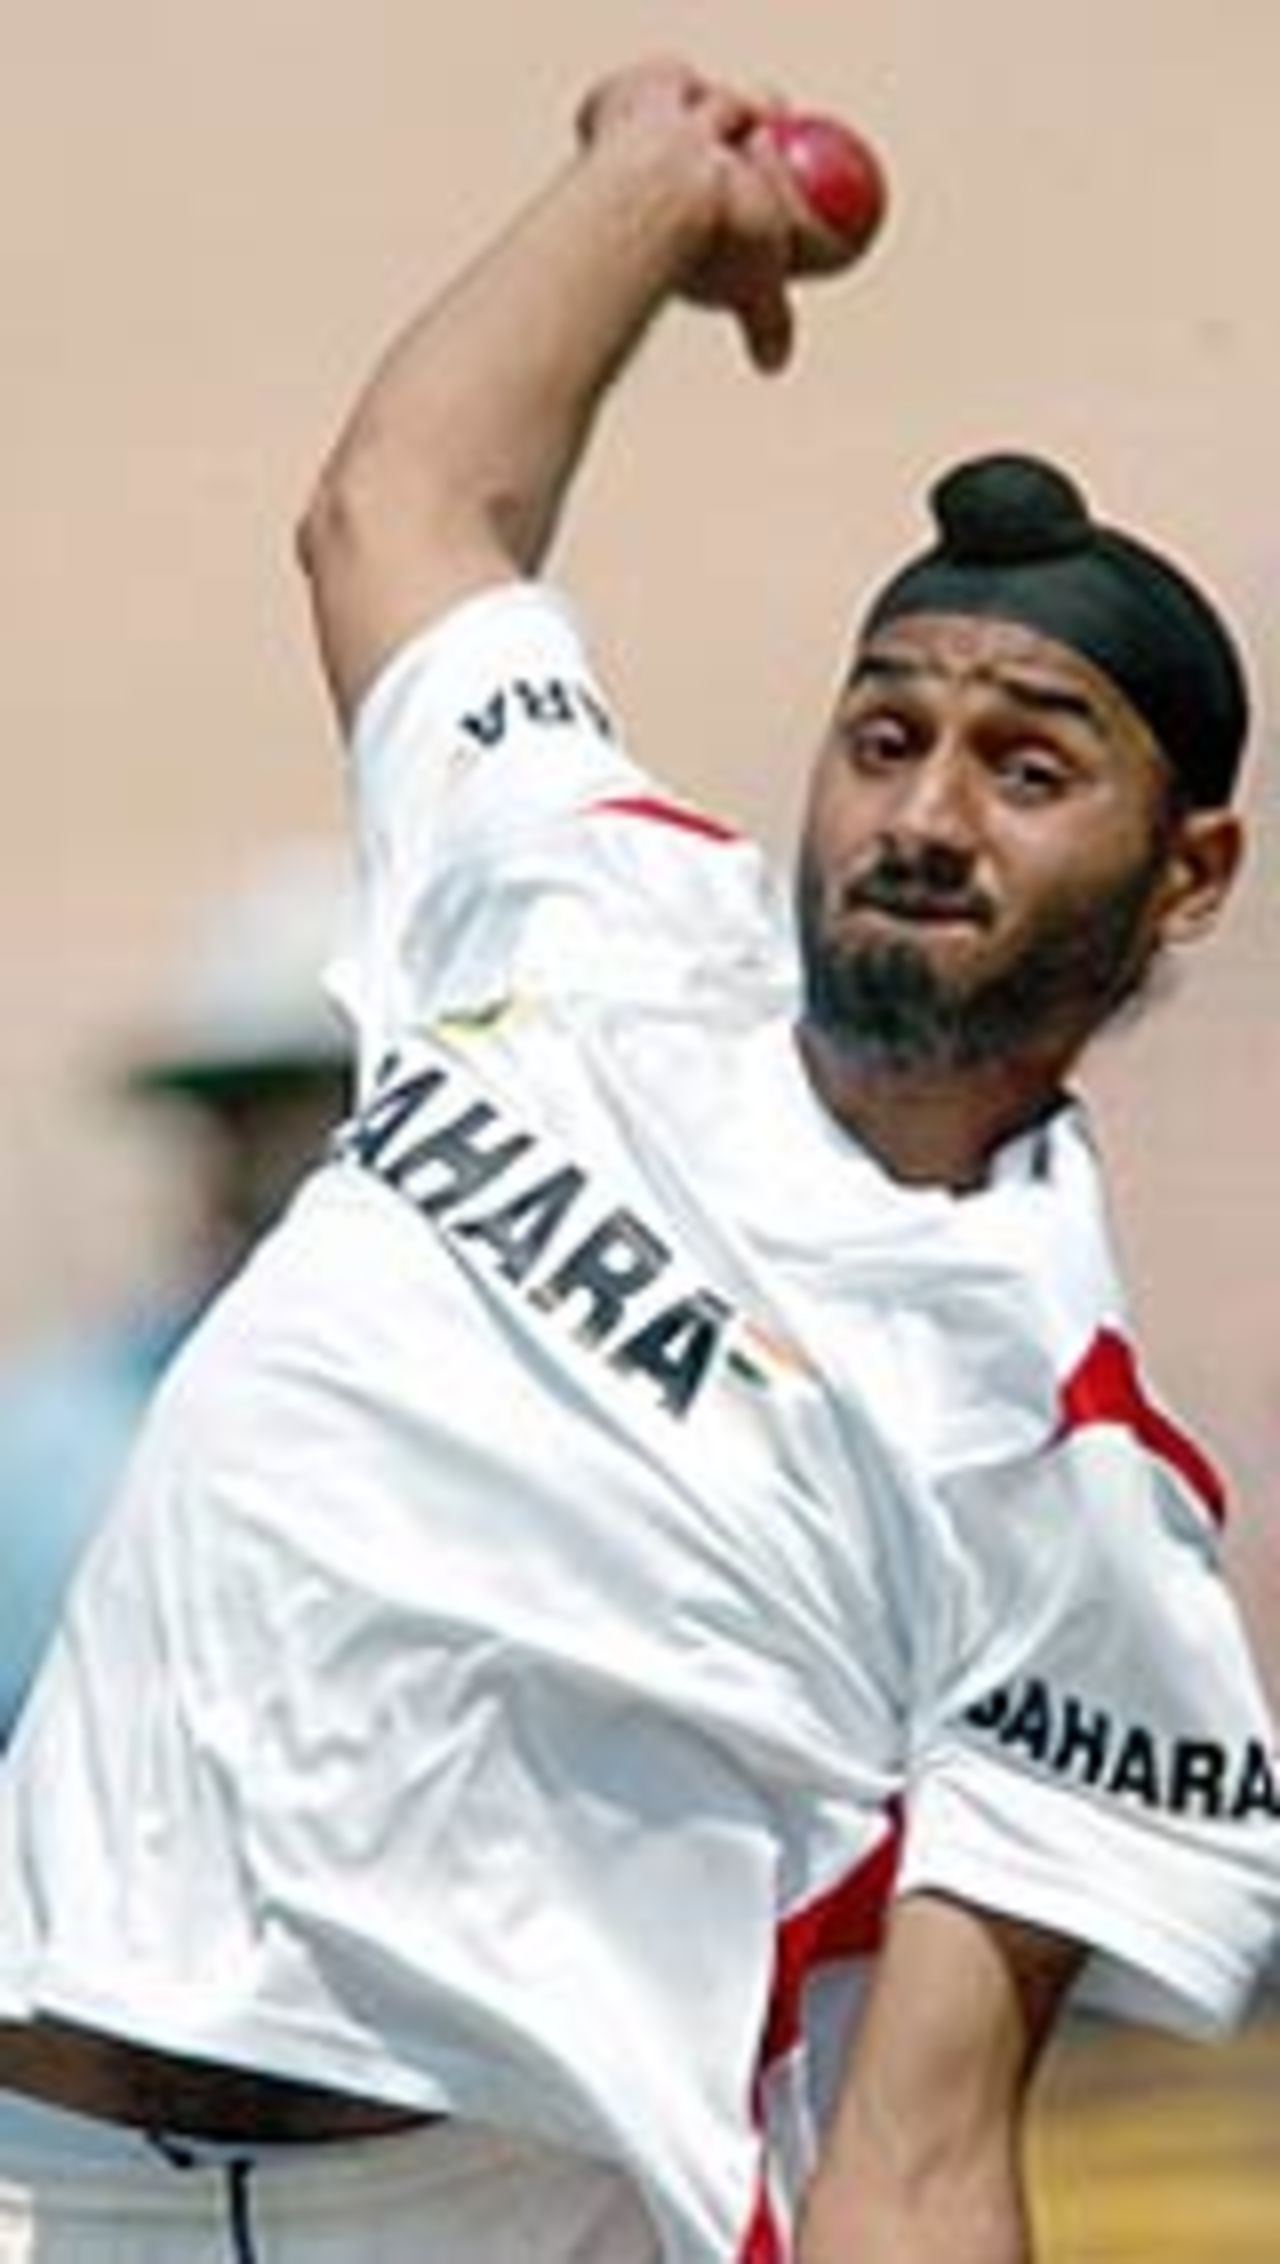 Harbhajan Singh bowling in the nets, Kolkata, March 15, 2005